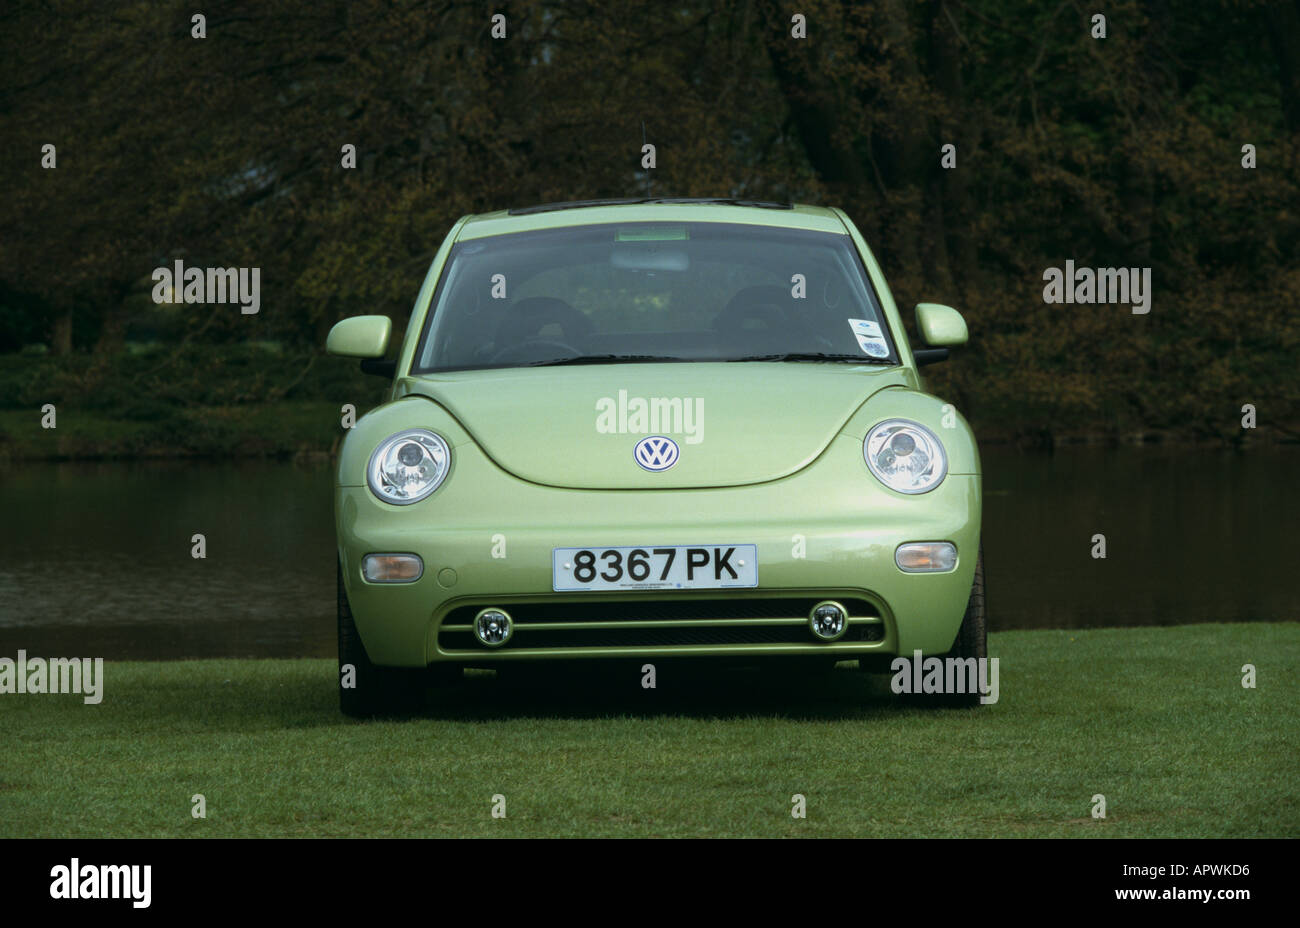 New Volkswagen Beetle Introduced 1999 Stock Photo